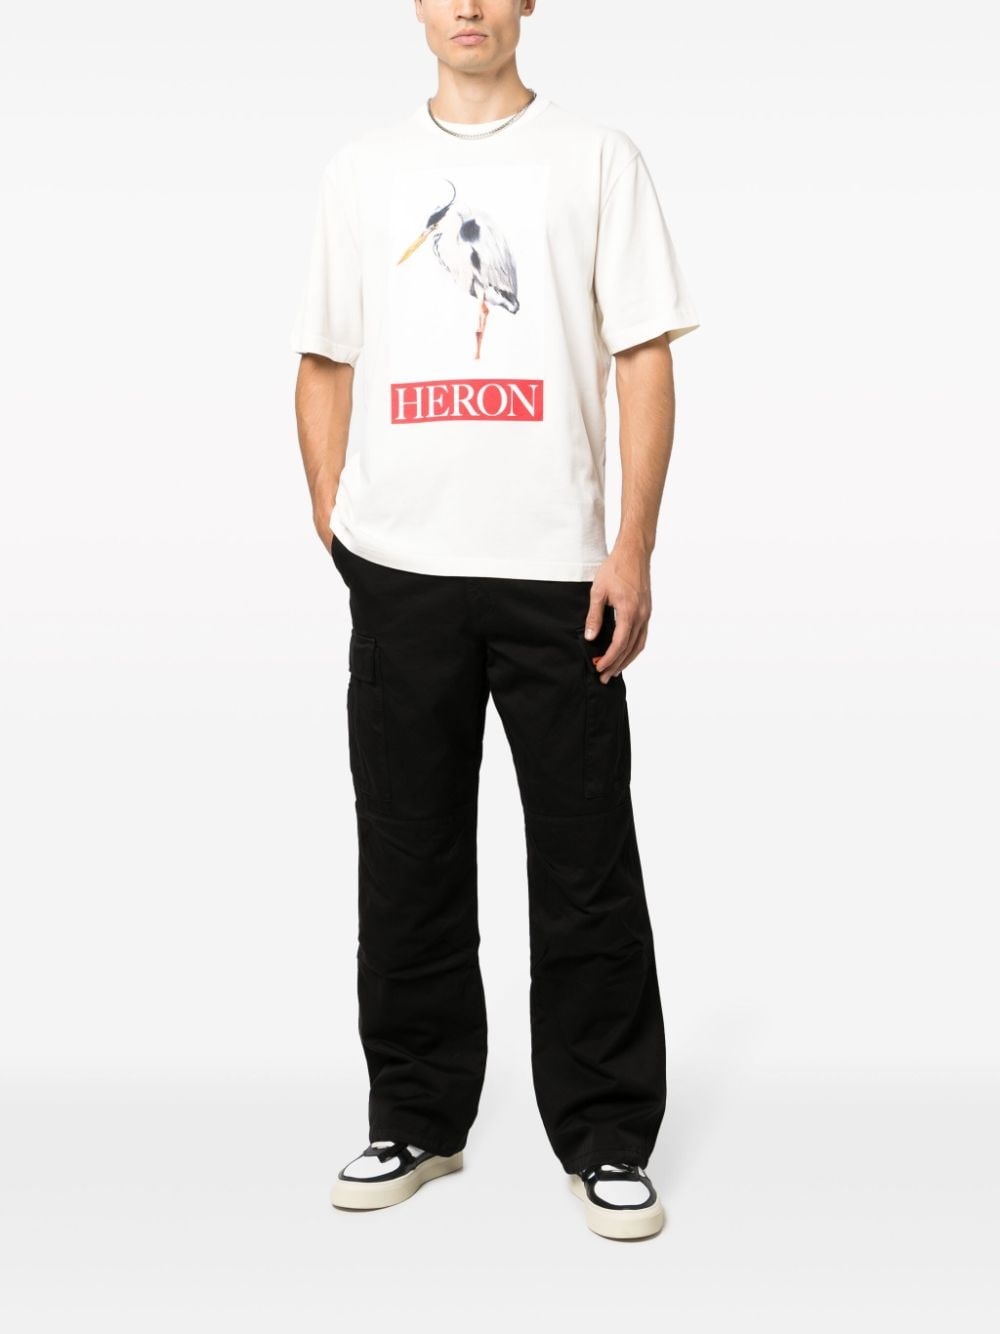 Heron Bird Painted cotton T-shirt - 2